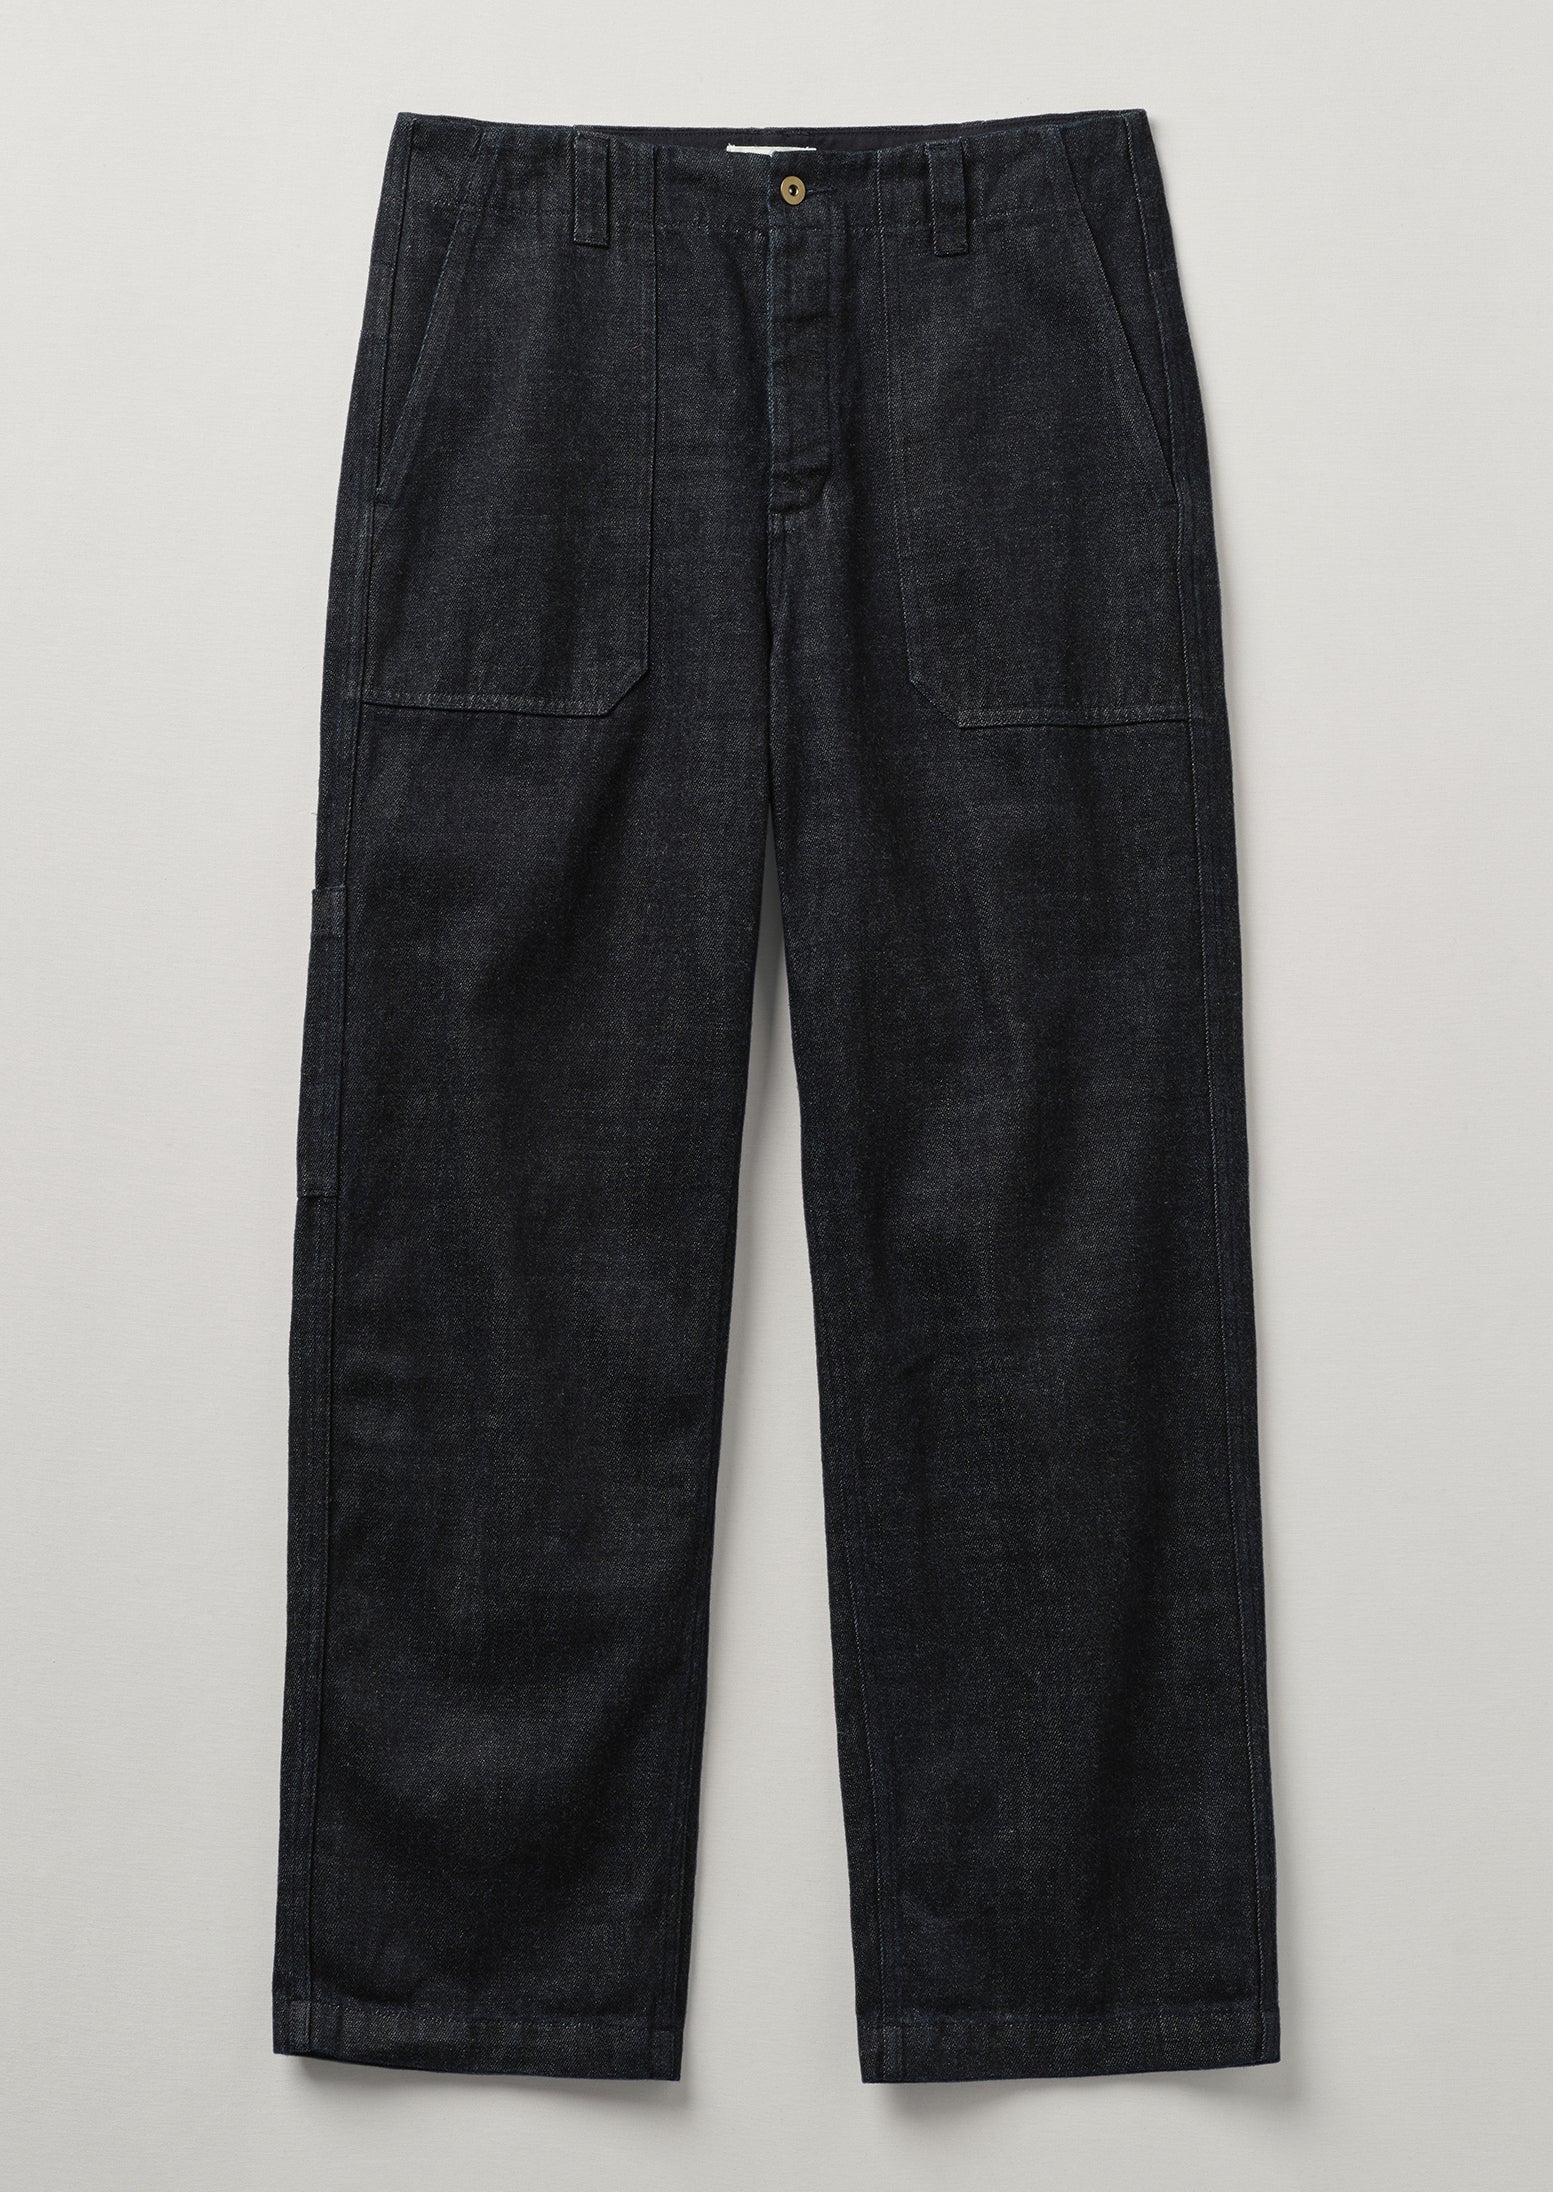 Rory Carpenter Japanese Denim Jeans, Indigo